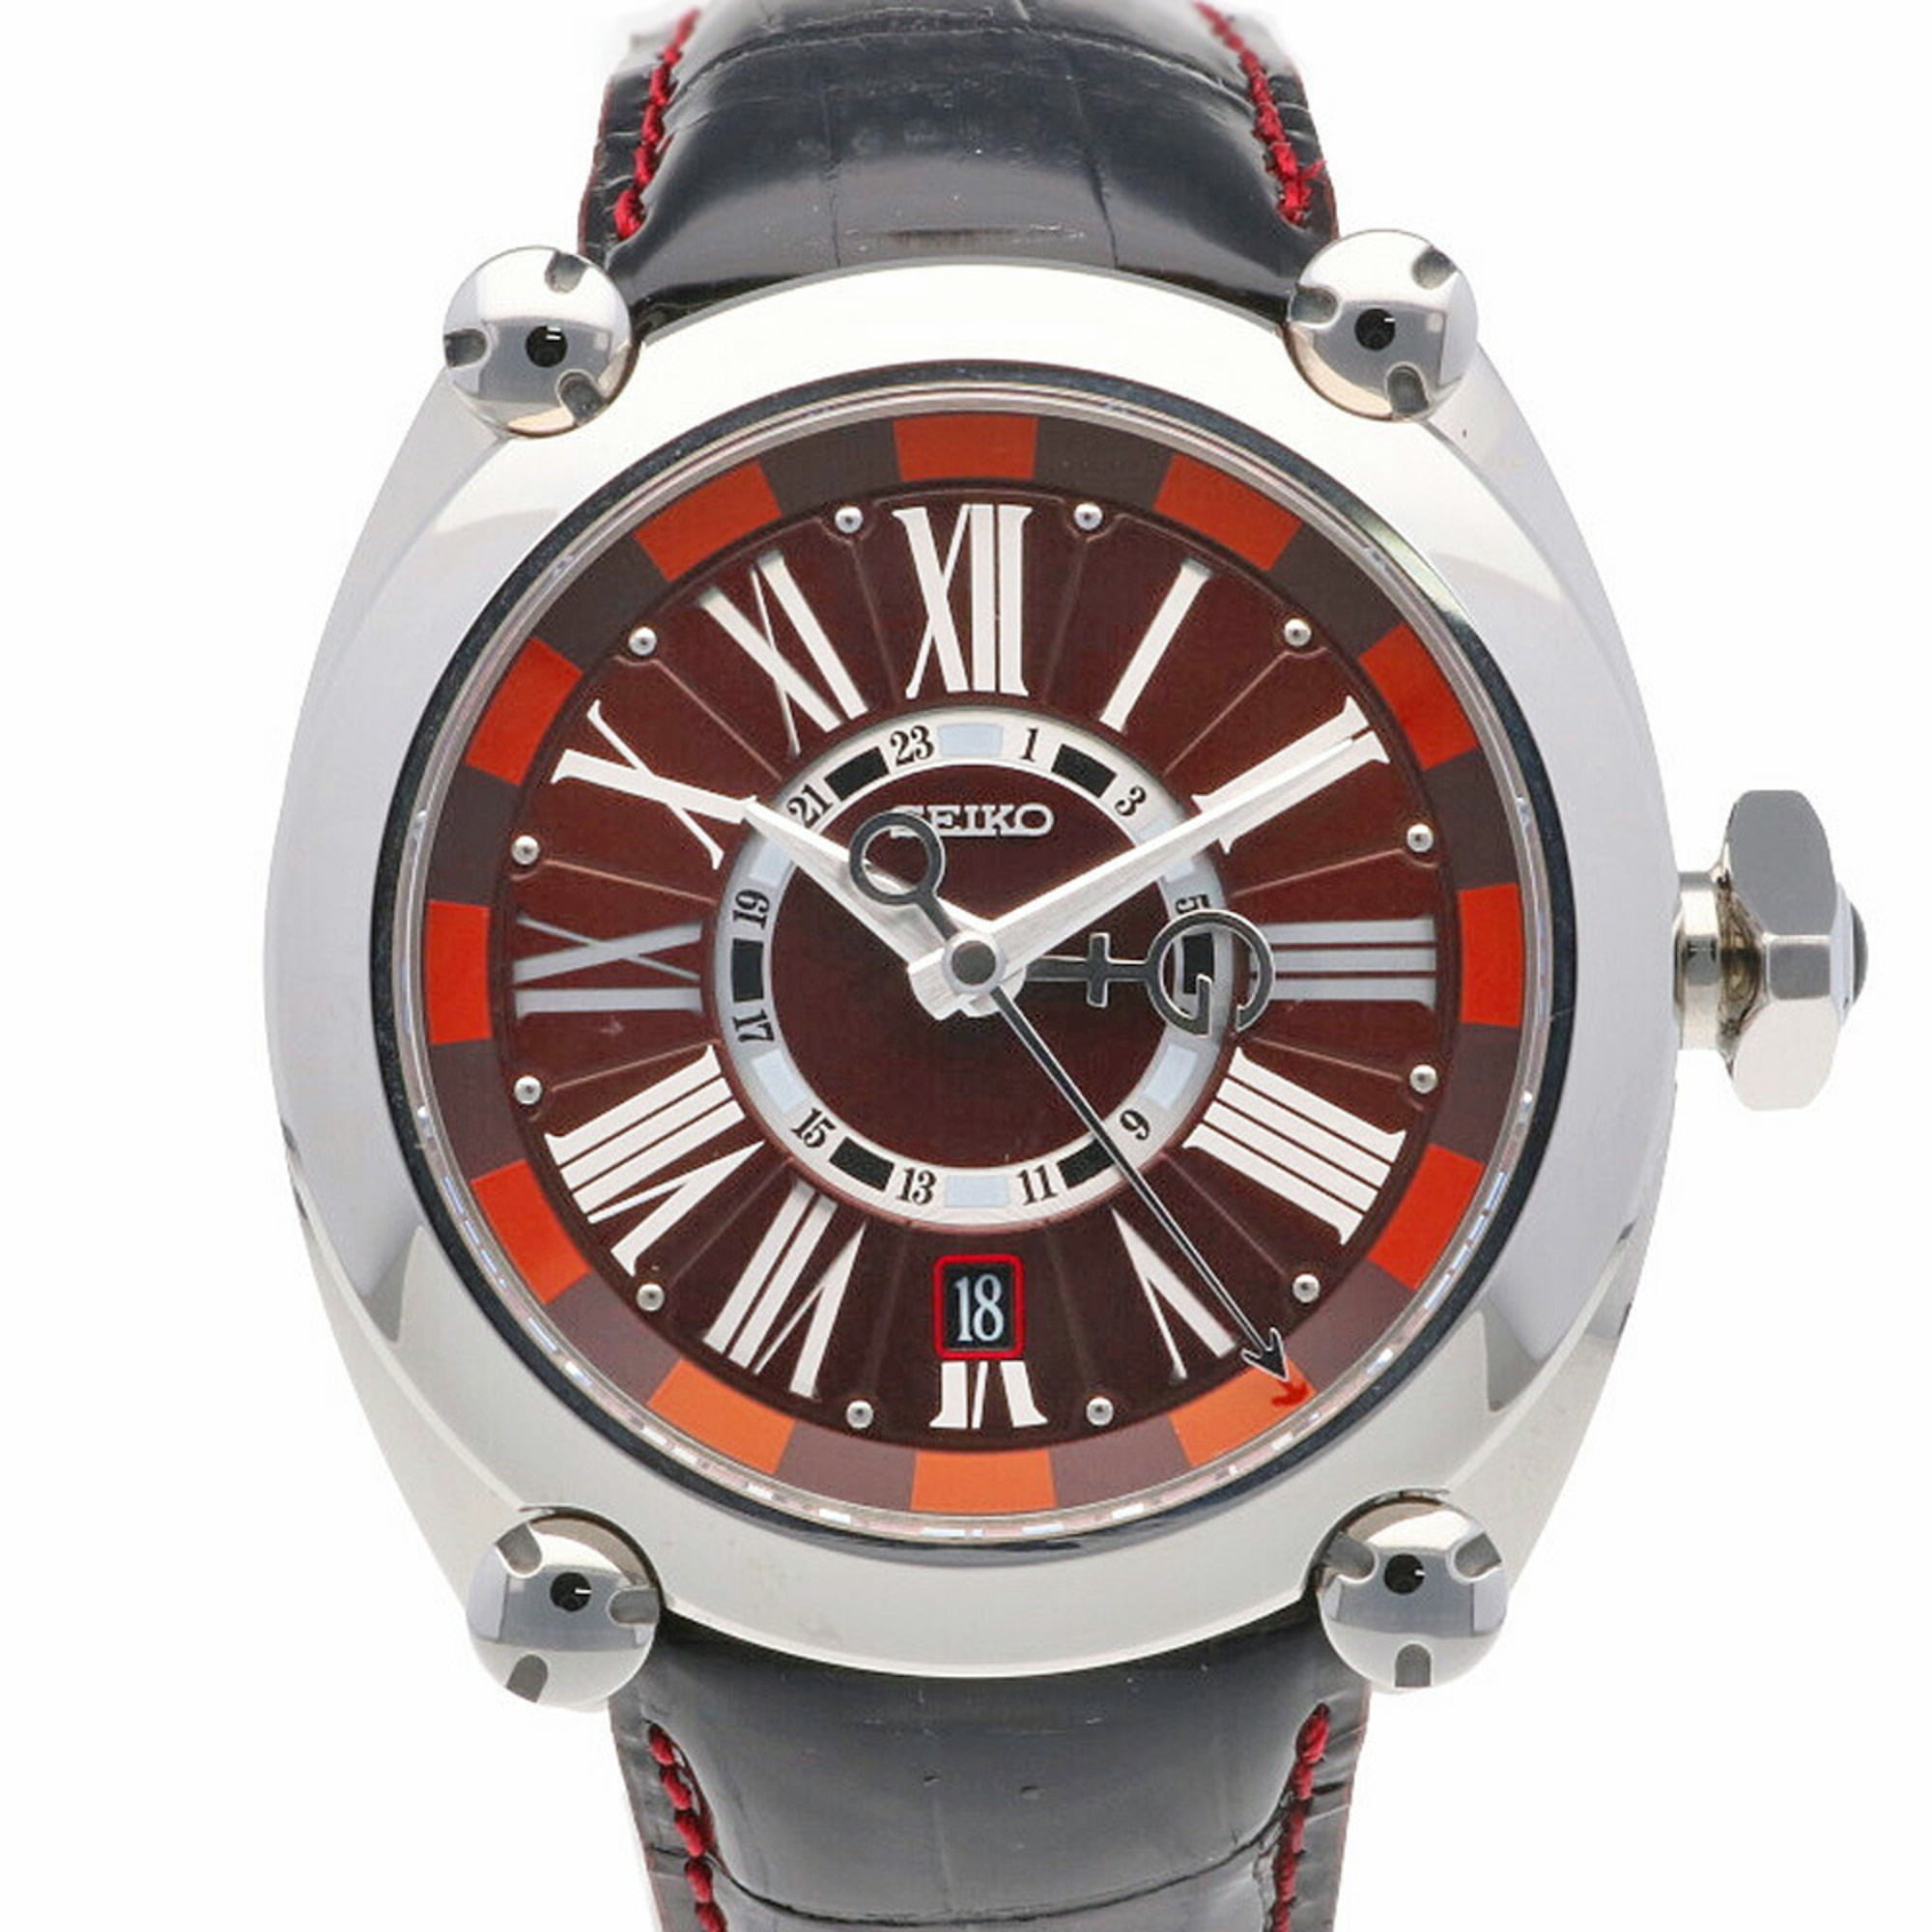 Used Seiko SEIKO Galante GMT watch stainless steel SBLM005 8L36-00C0 men's  